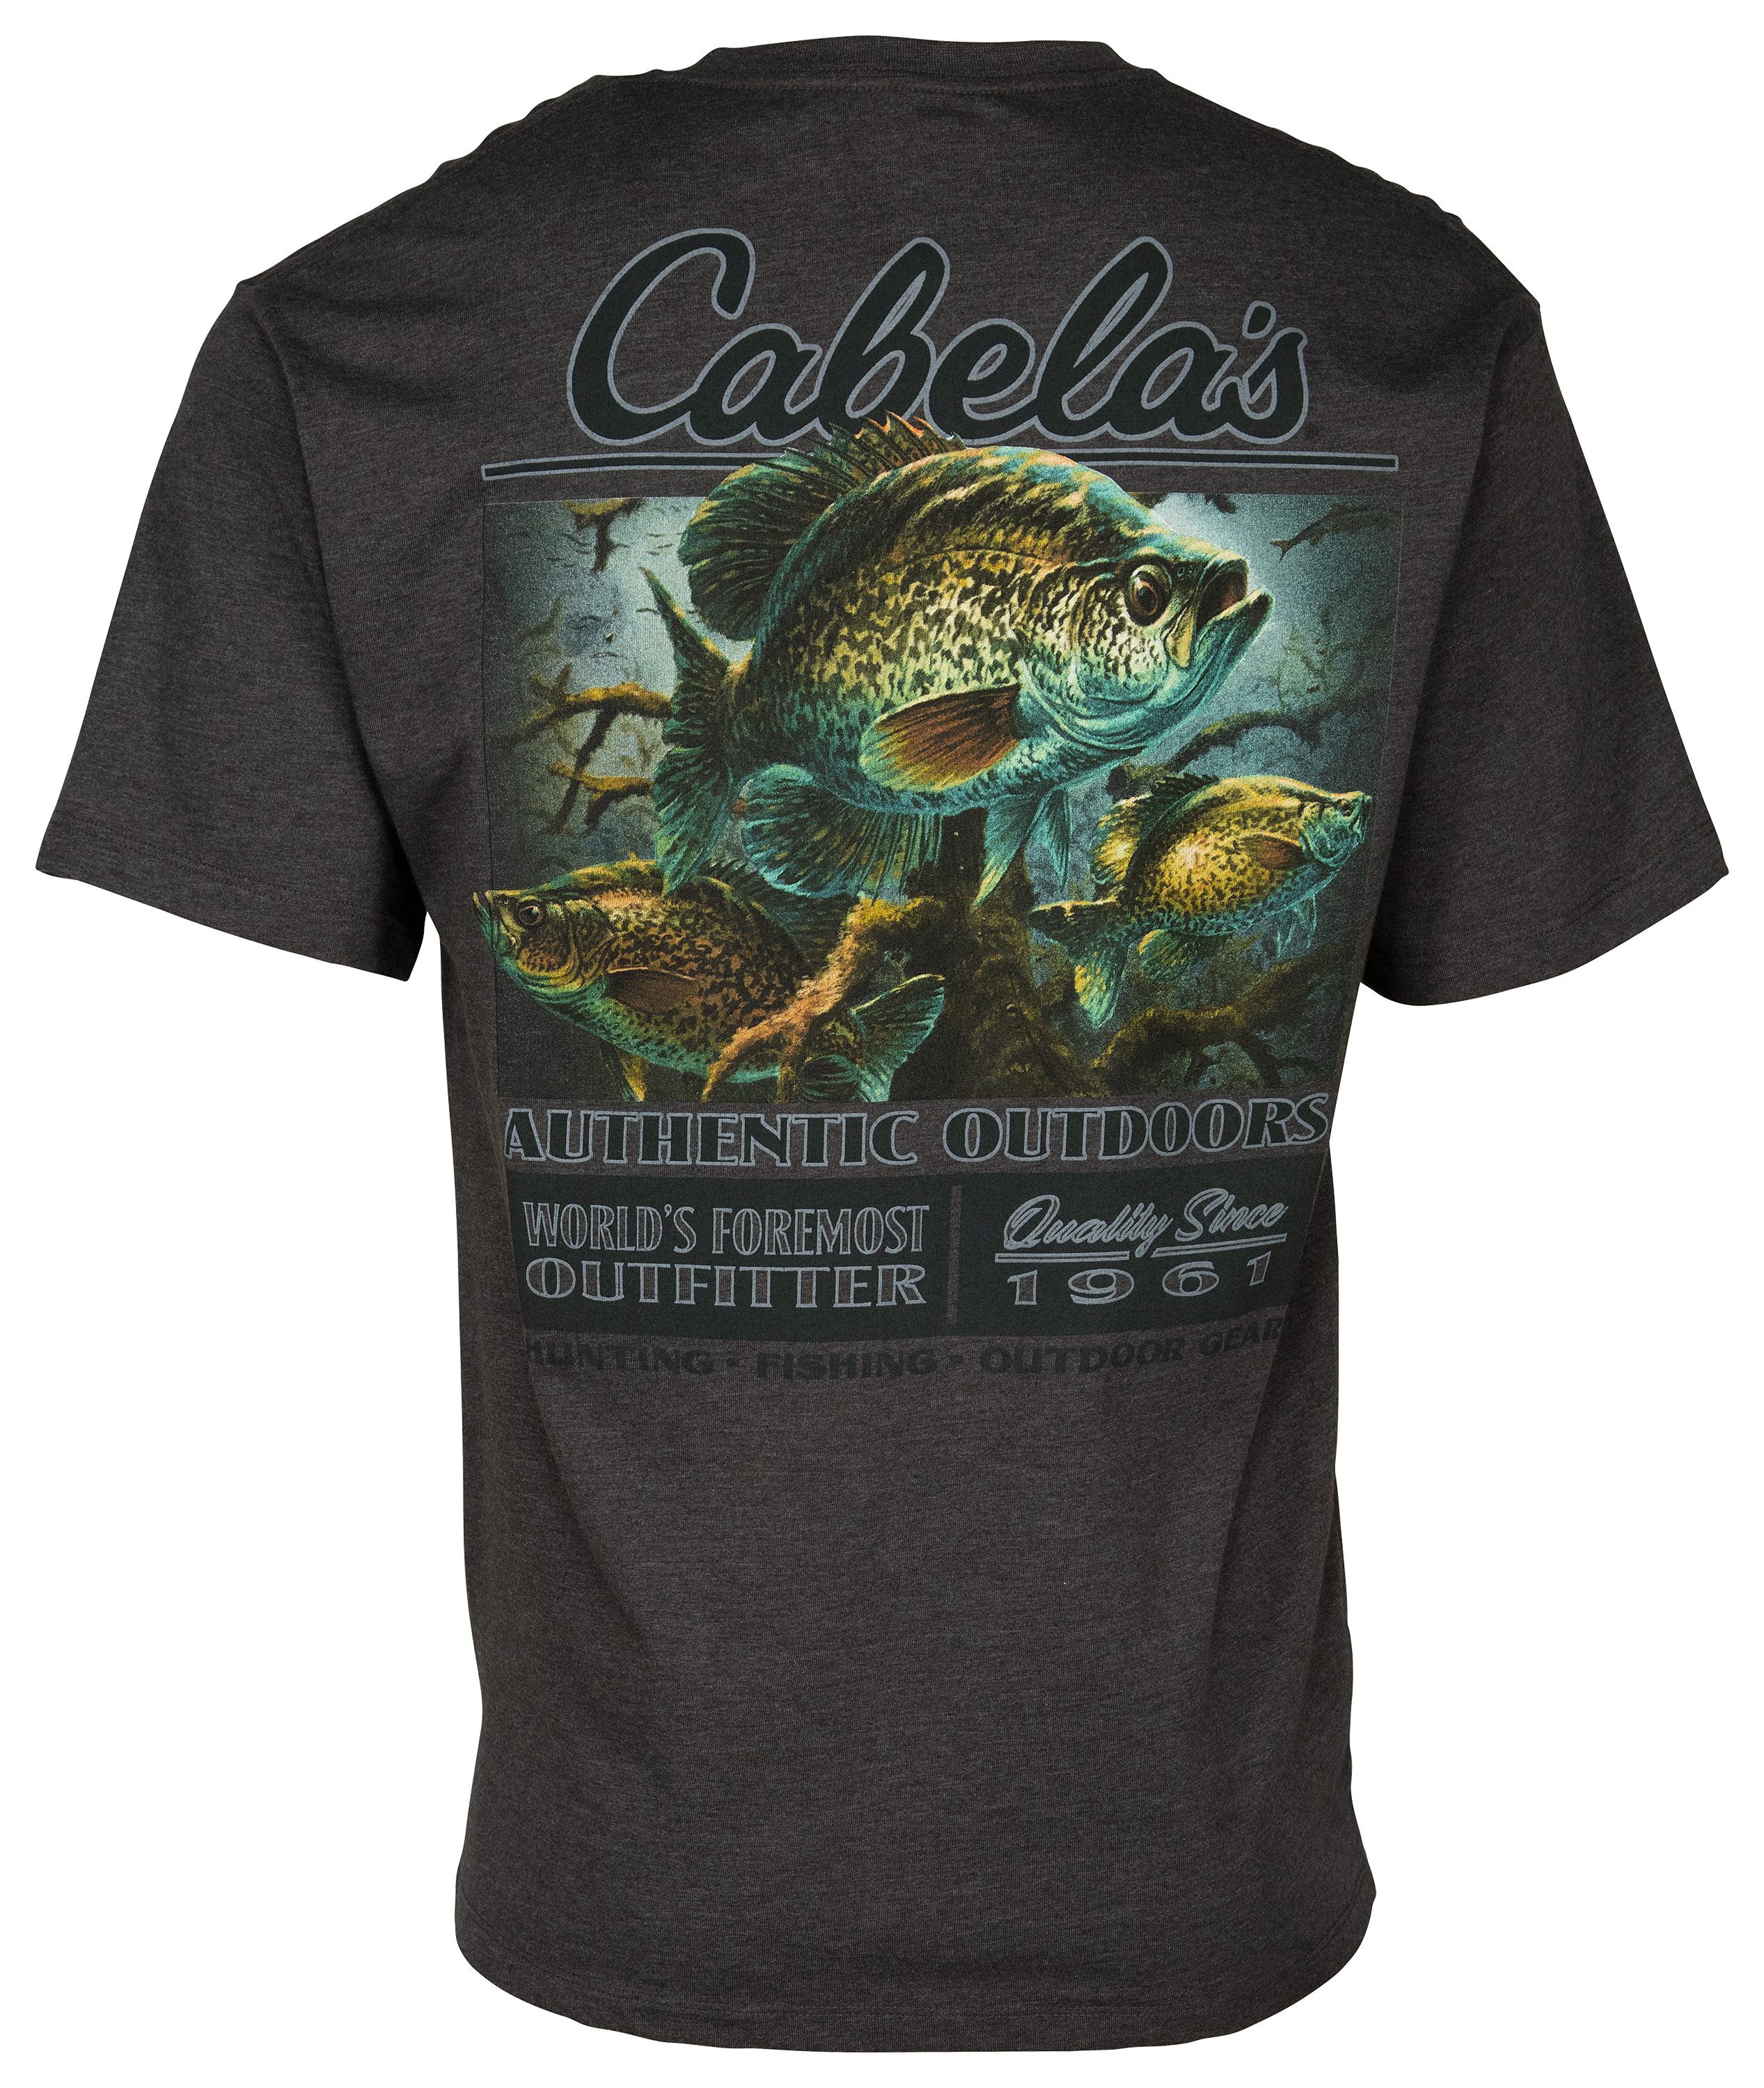 Men's Fishing T-Shirt, Outdoor Sport Short Sleeve Top, Lure Fish